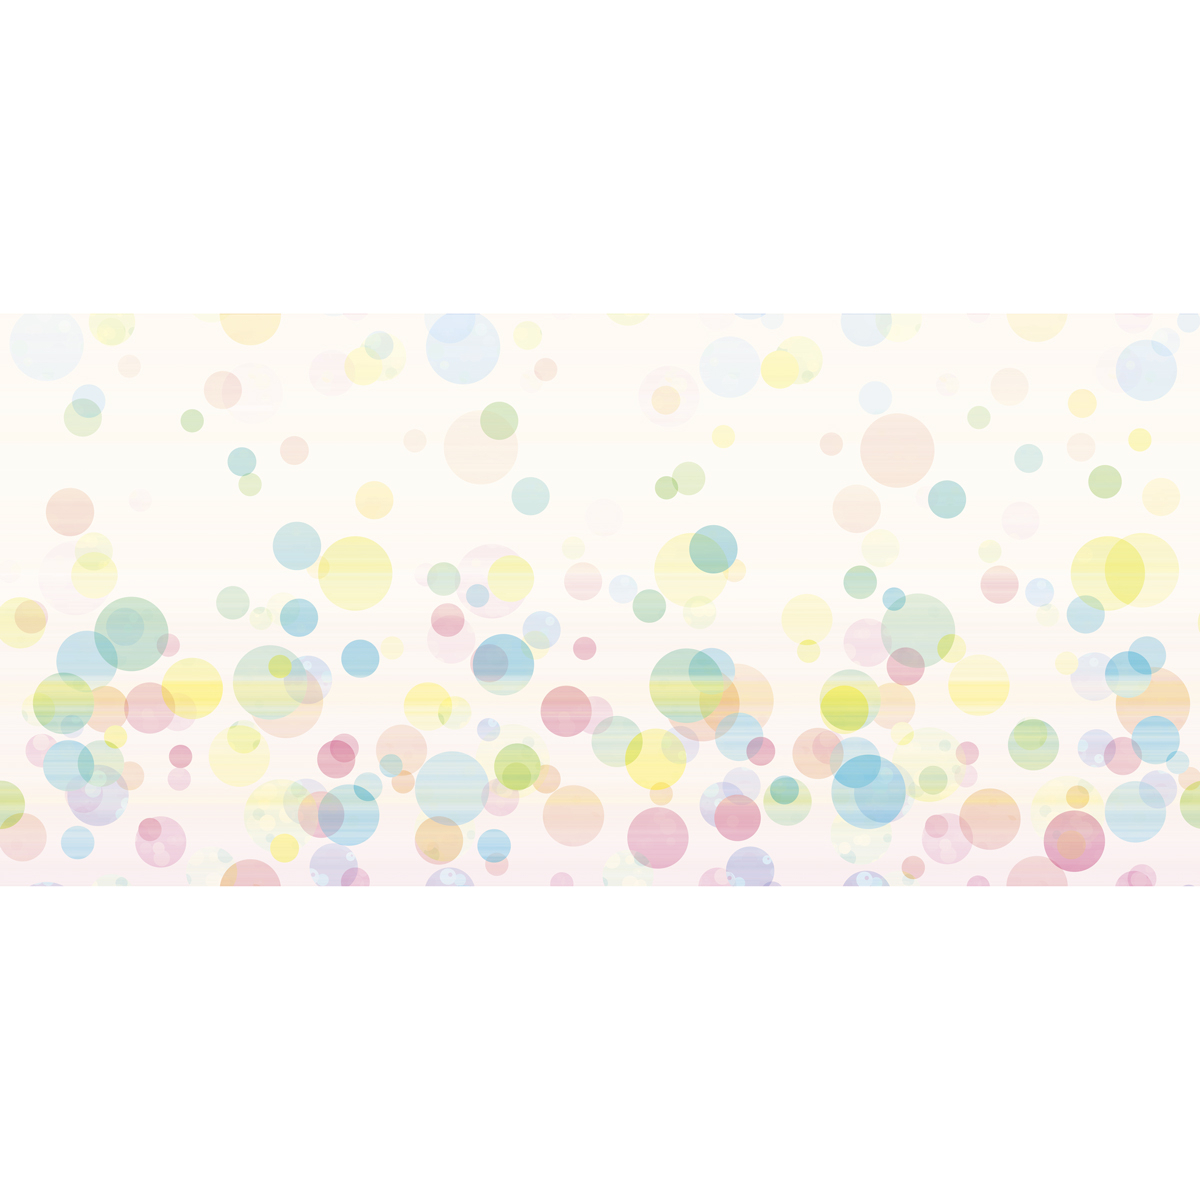 Bubble panoramic wallpaper - Lili Bambou Design Collection - Acte-Deco